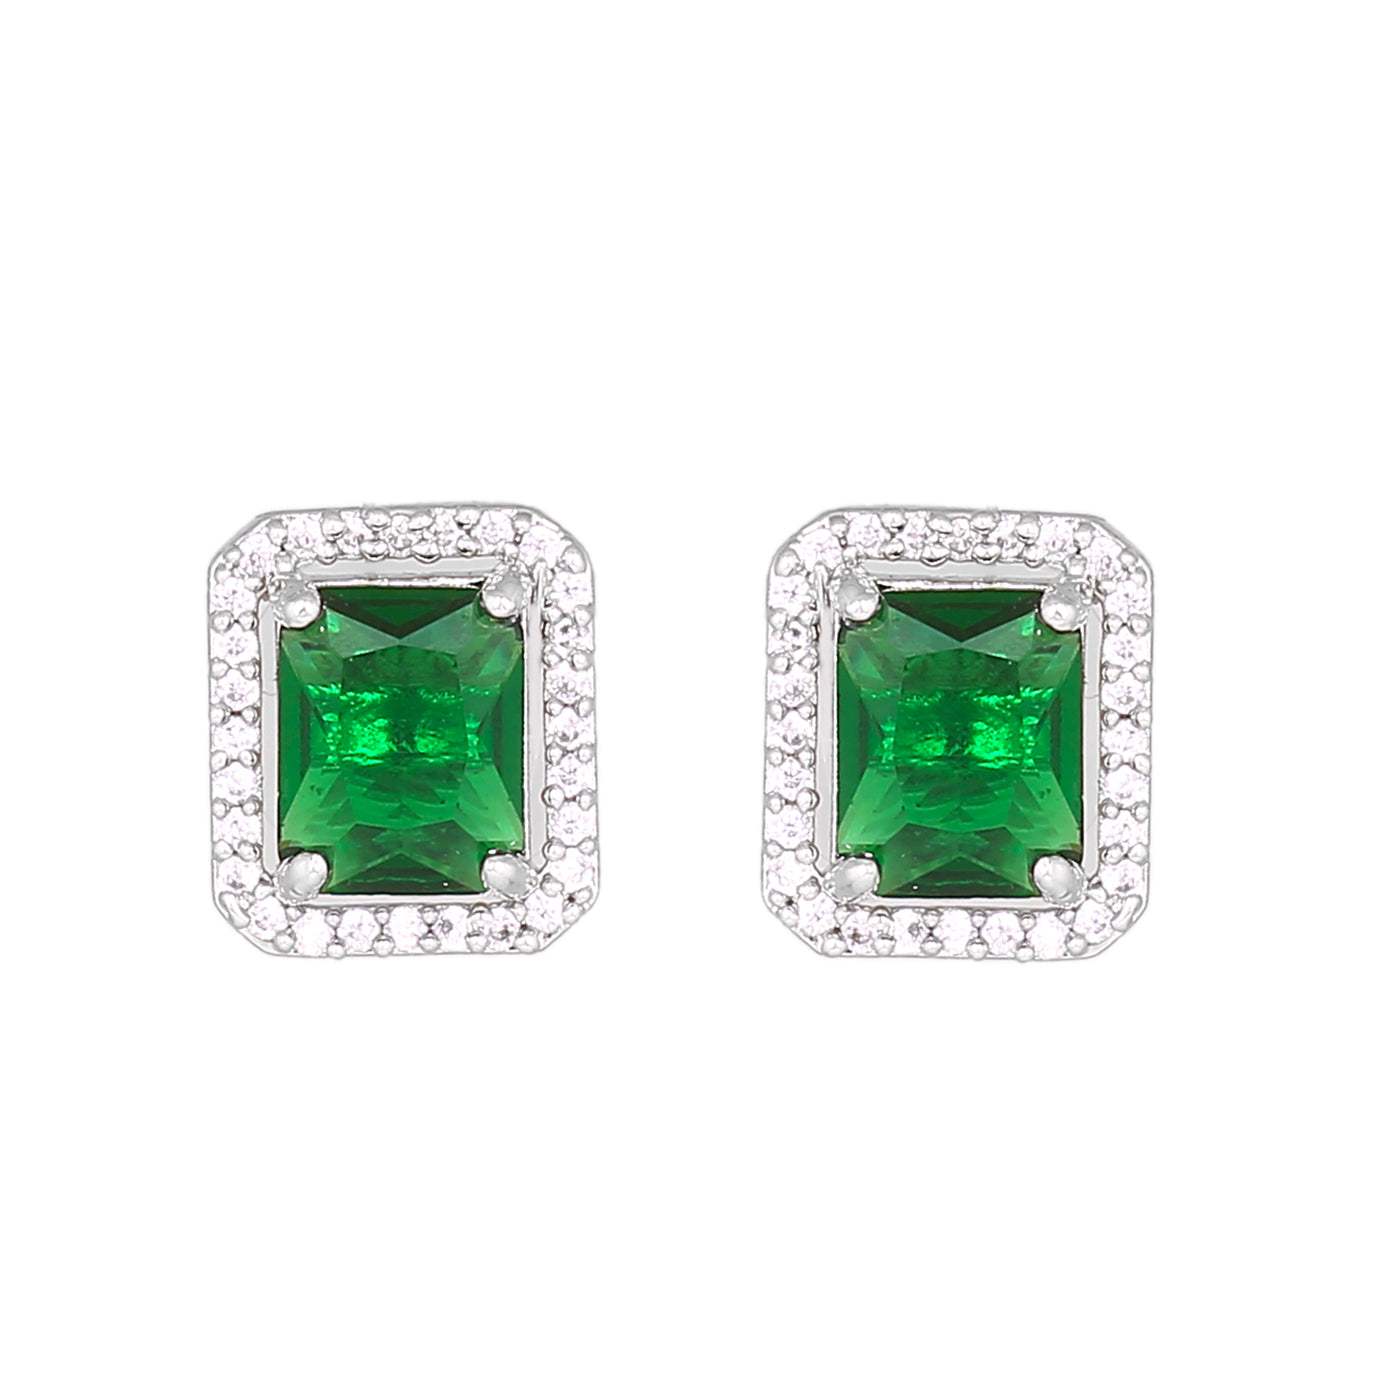 Estele Rhodium Plated CZ Sparkling Square Designer Pendant Set with Emerald Stone for Women